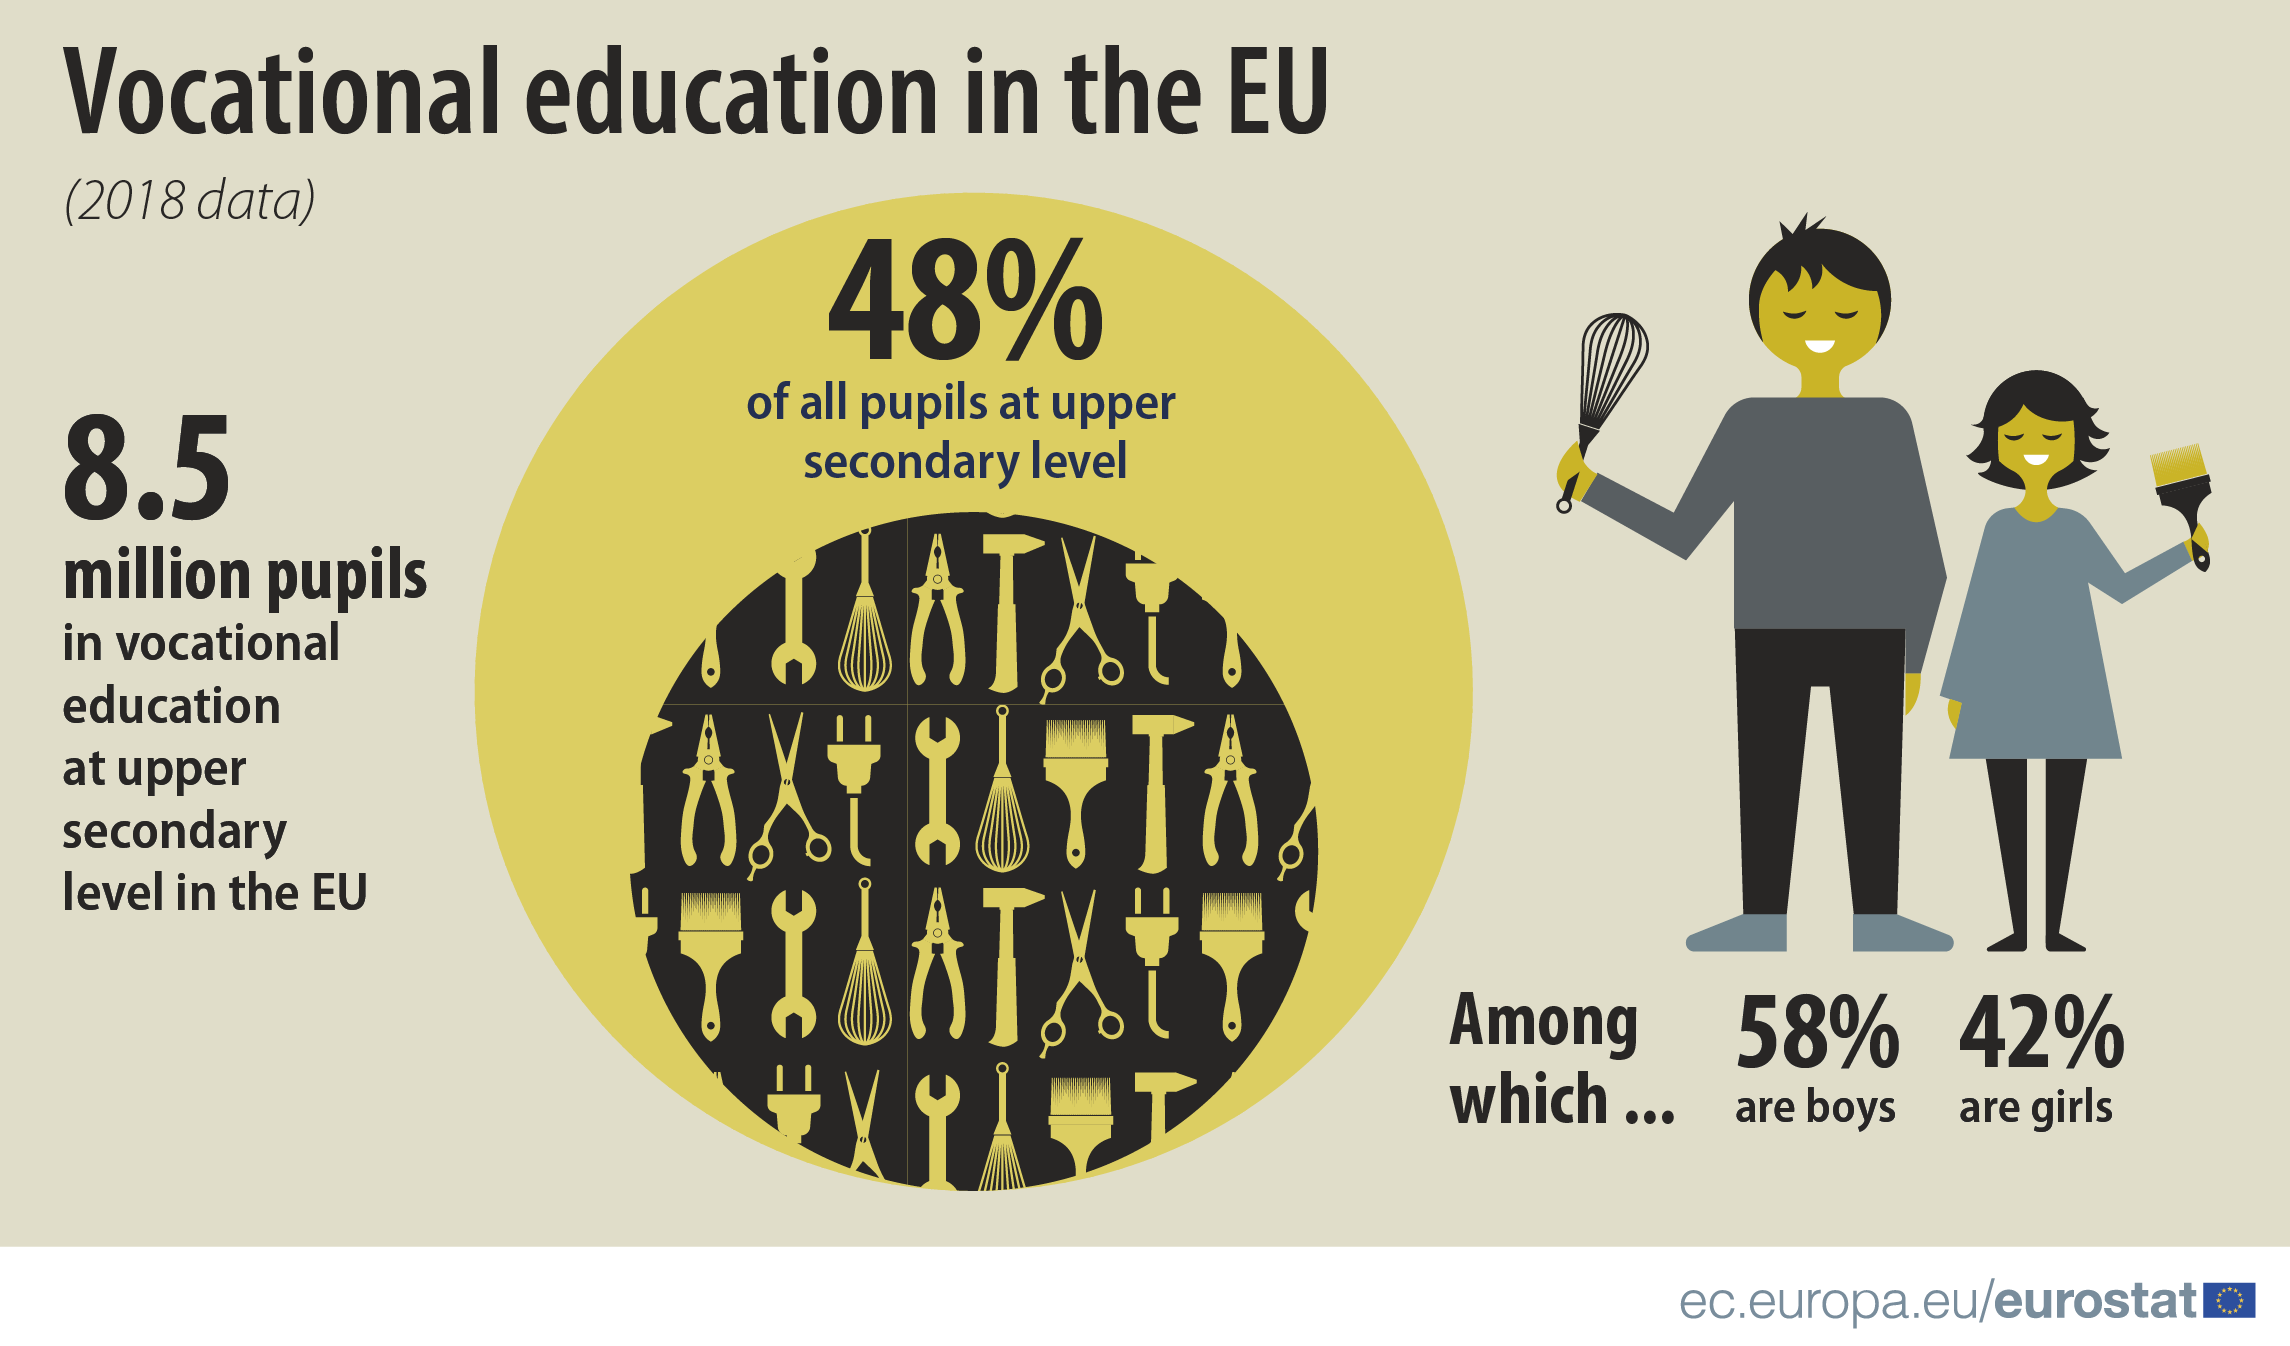 Almost half of EU pupils study vocational programmes - Product - Eurostat